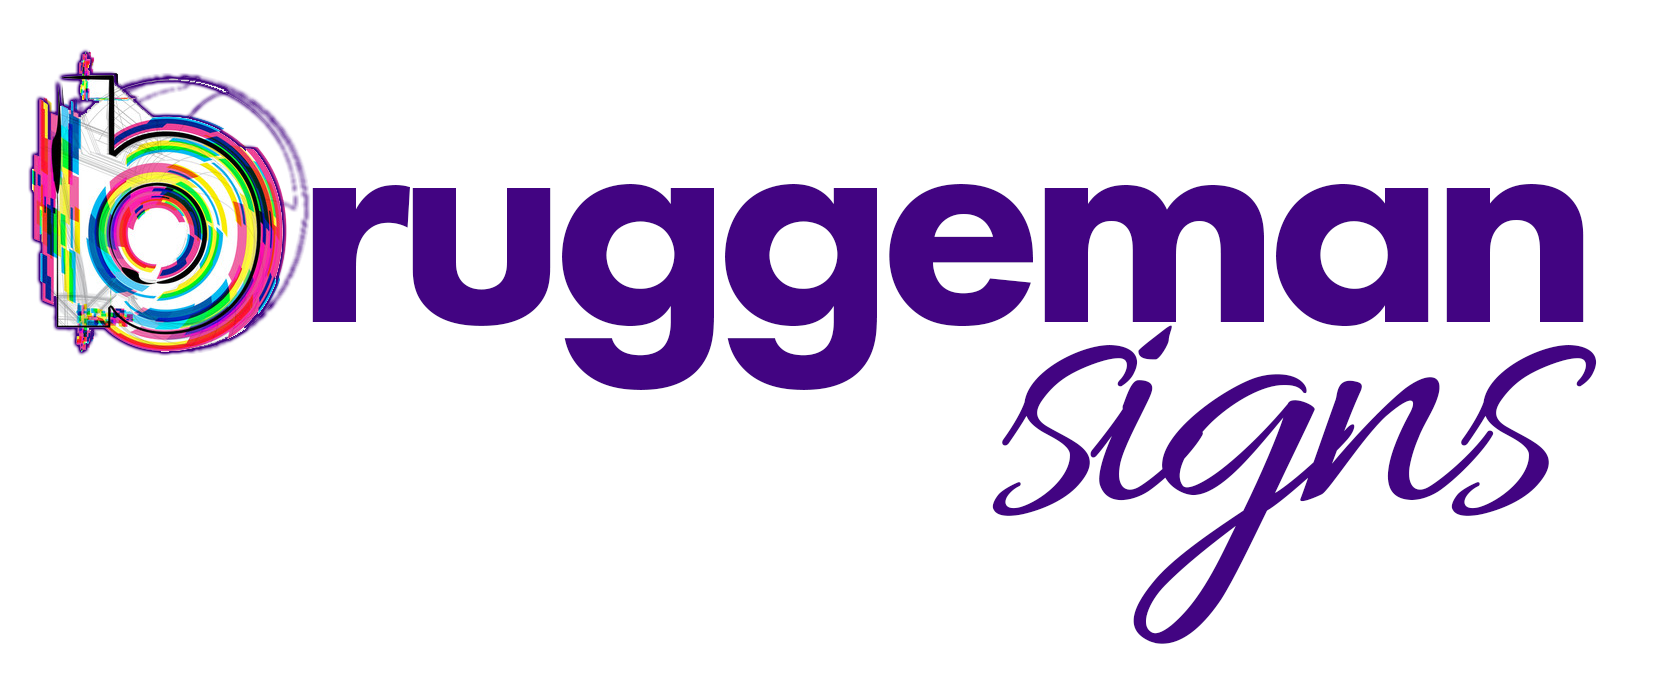 Bruggeman Signs